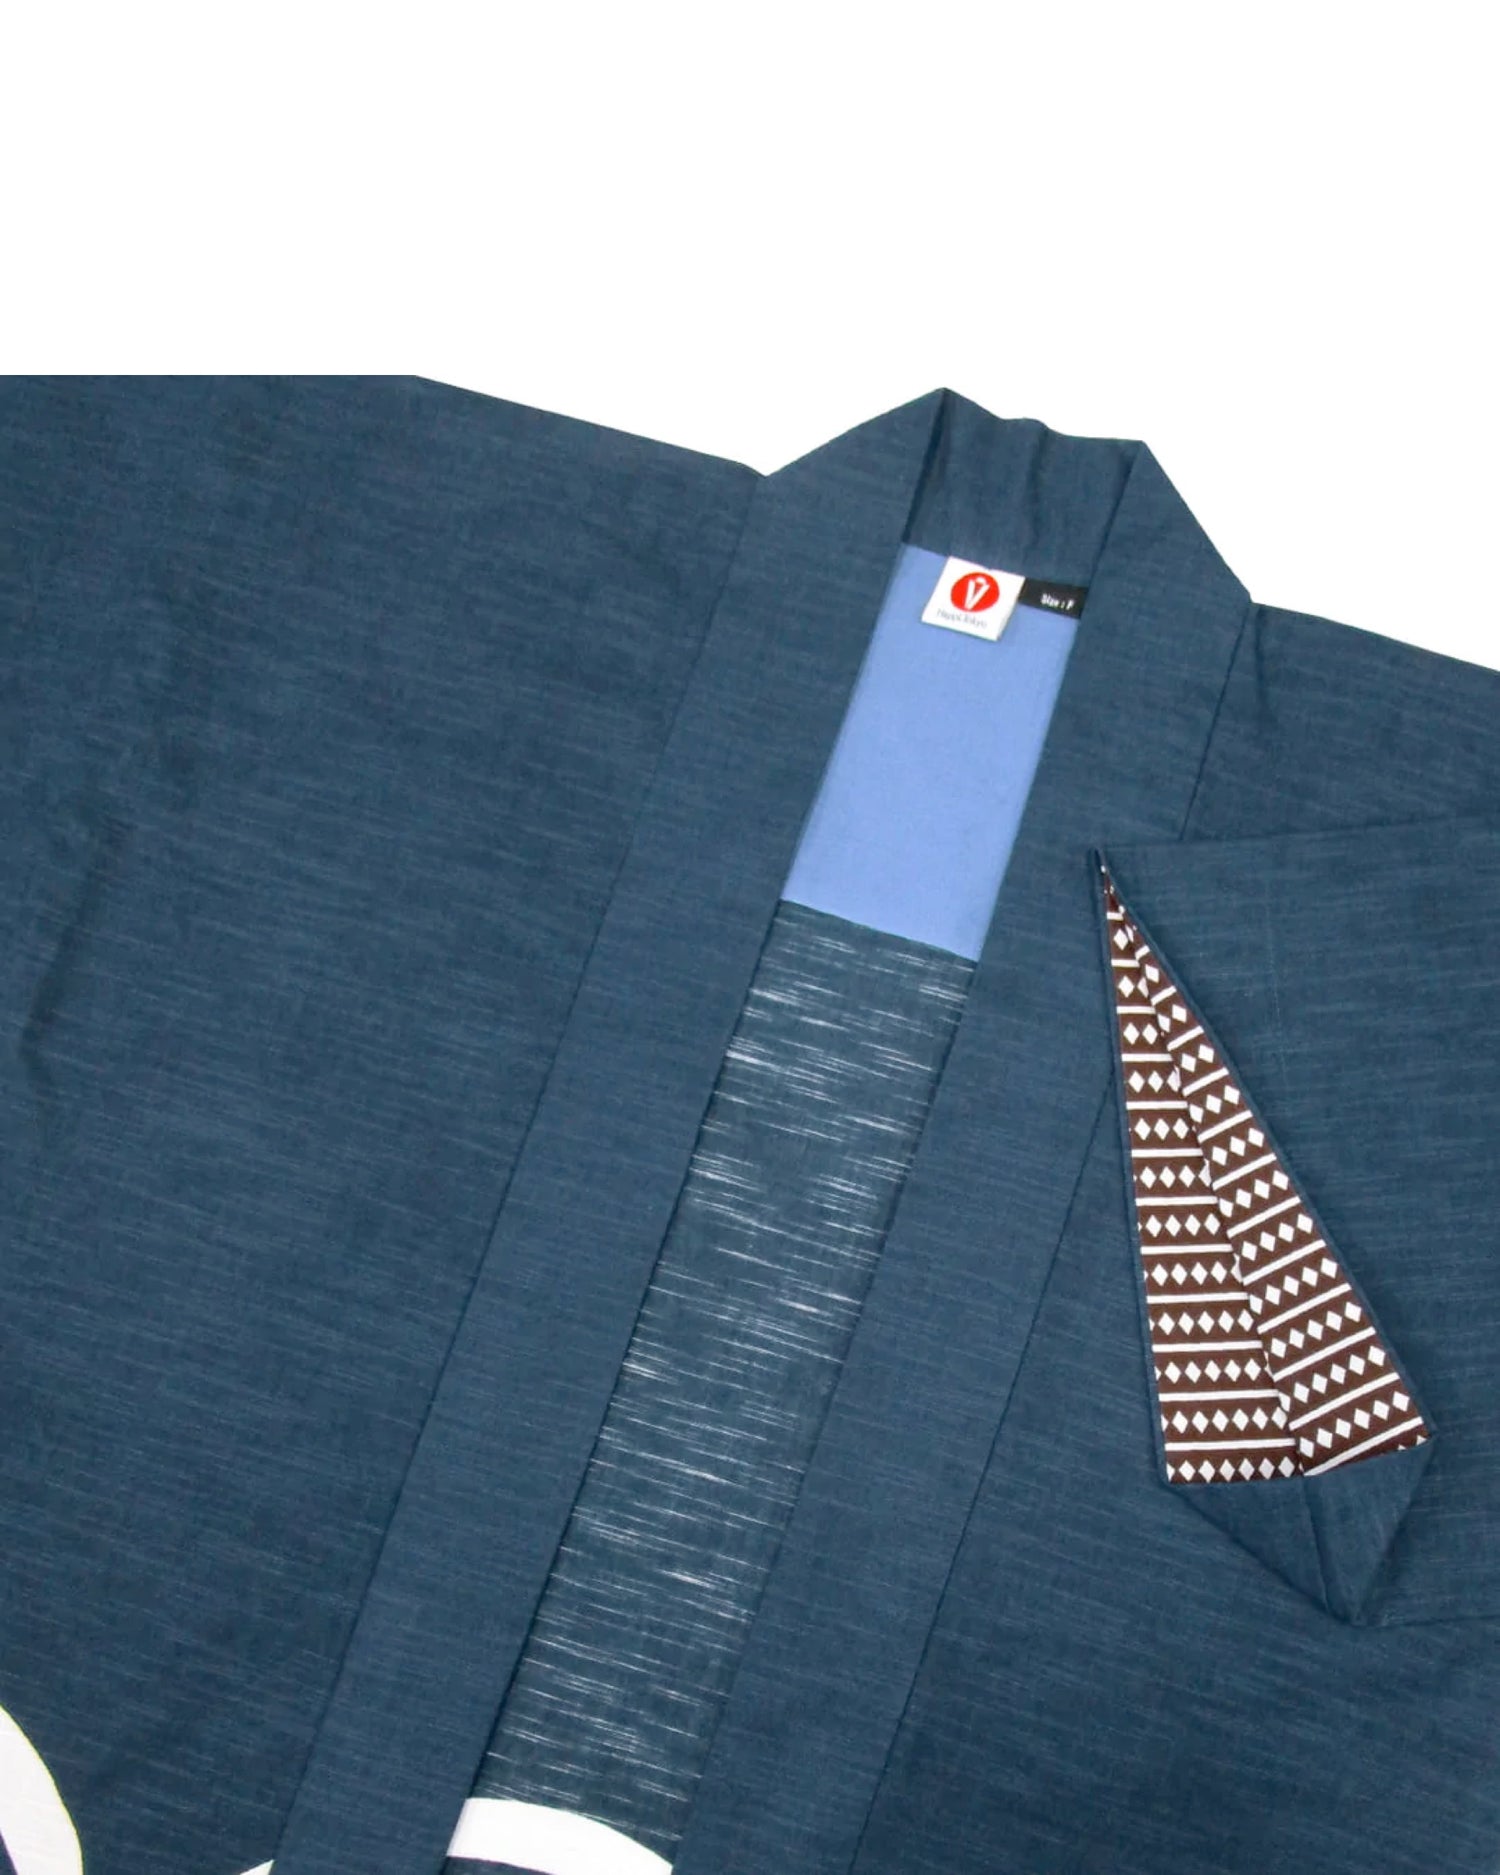 Japanese Happi Coat by Master Craftsmanship, Closeup